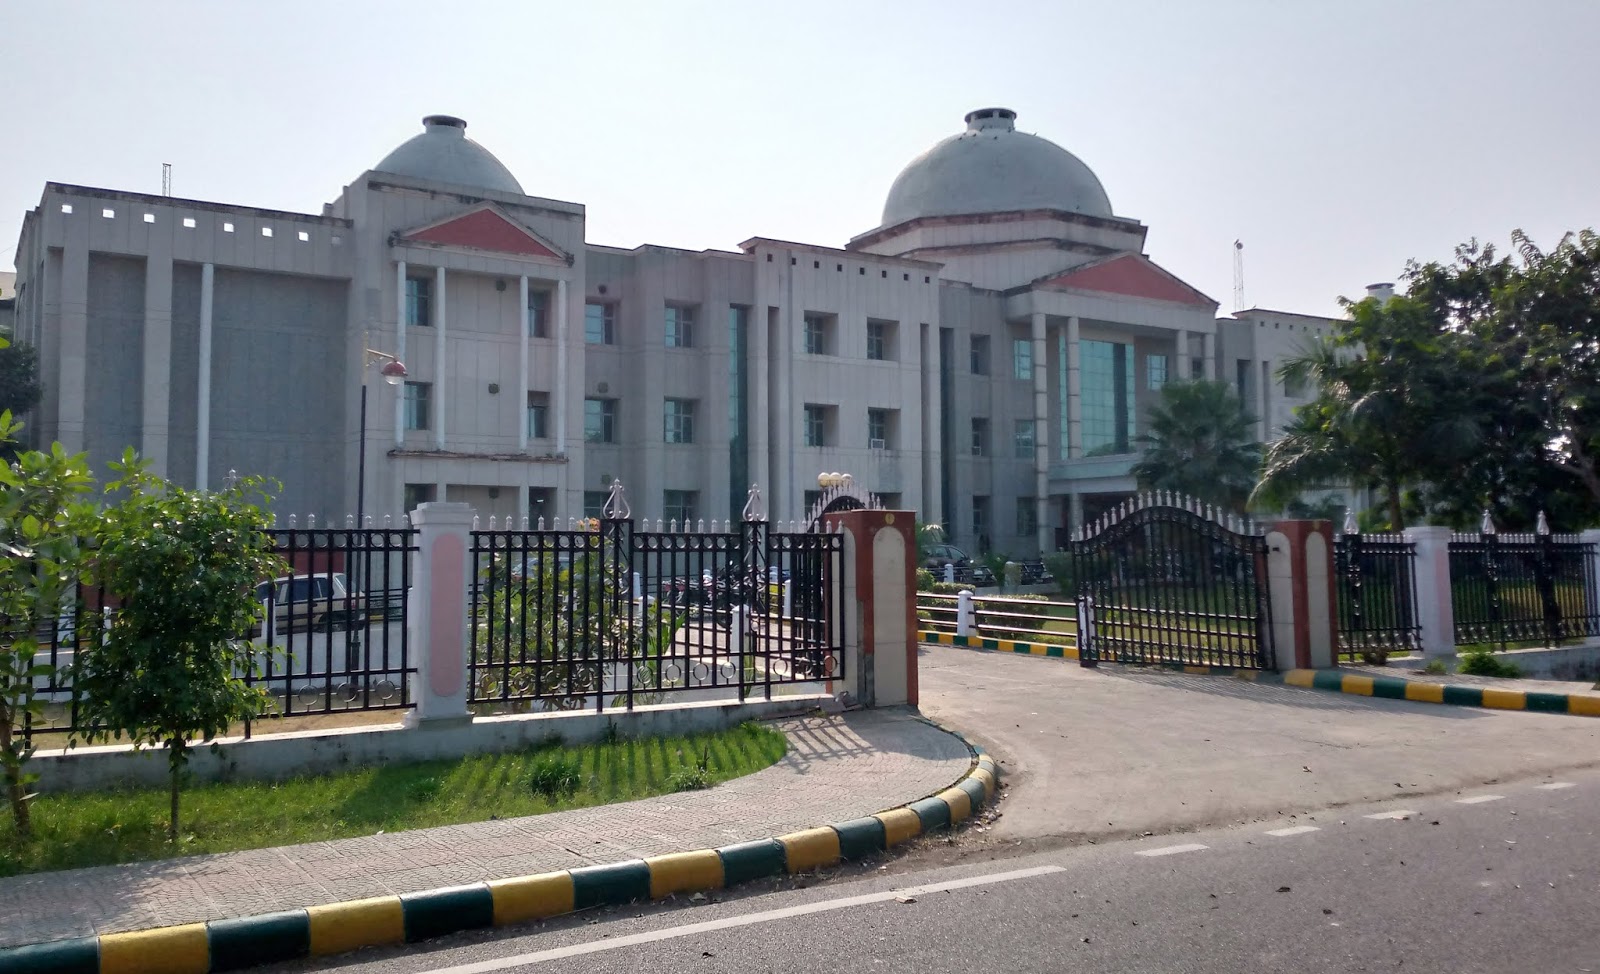 Chhatrapati Shahu Ji Maharaj University